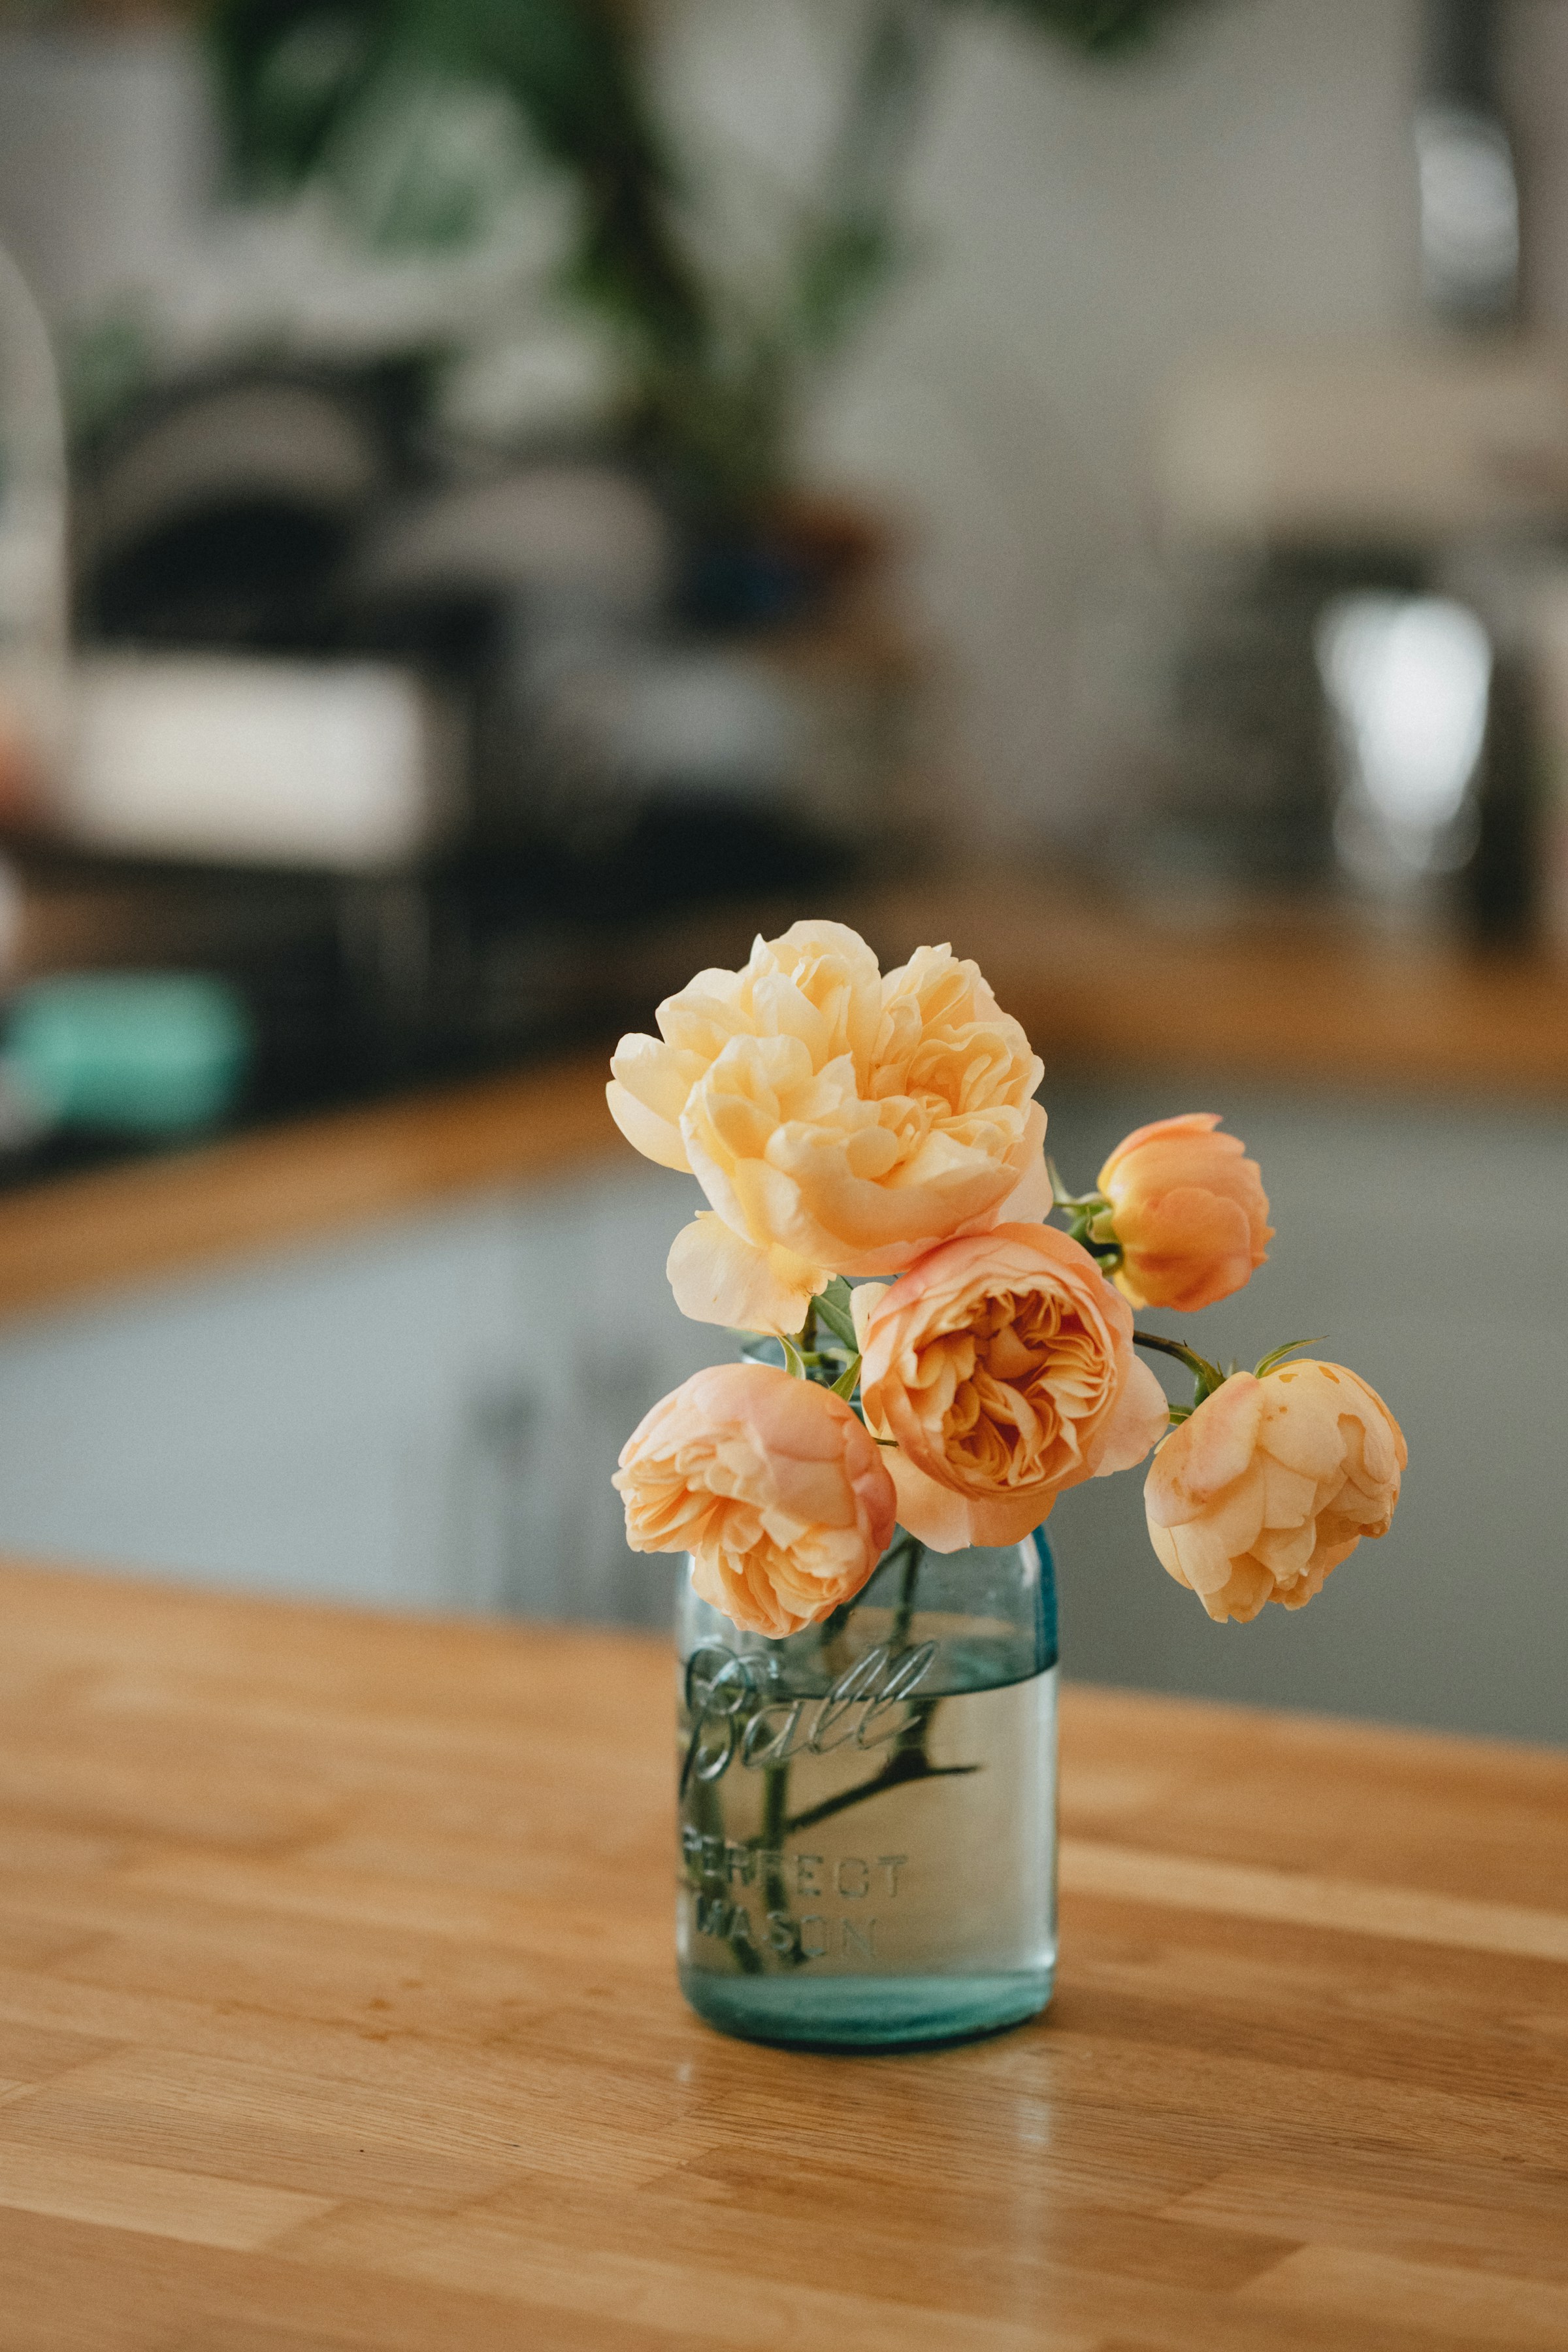 Vase of flowers | Source: Unsplash